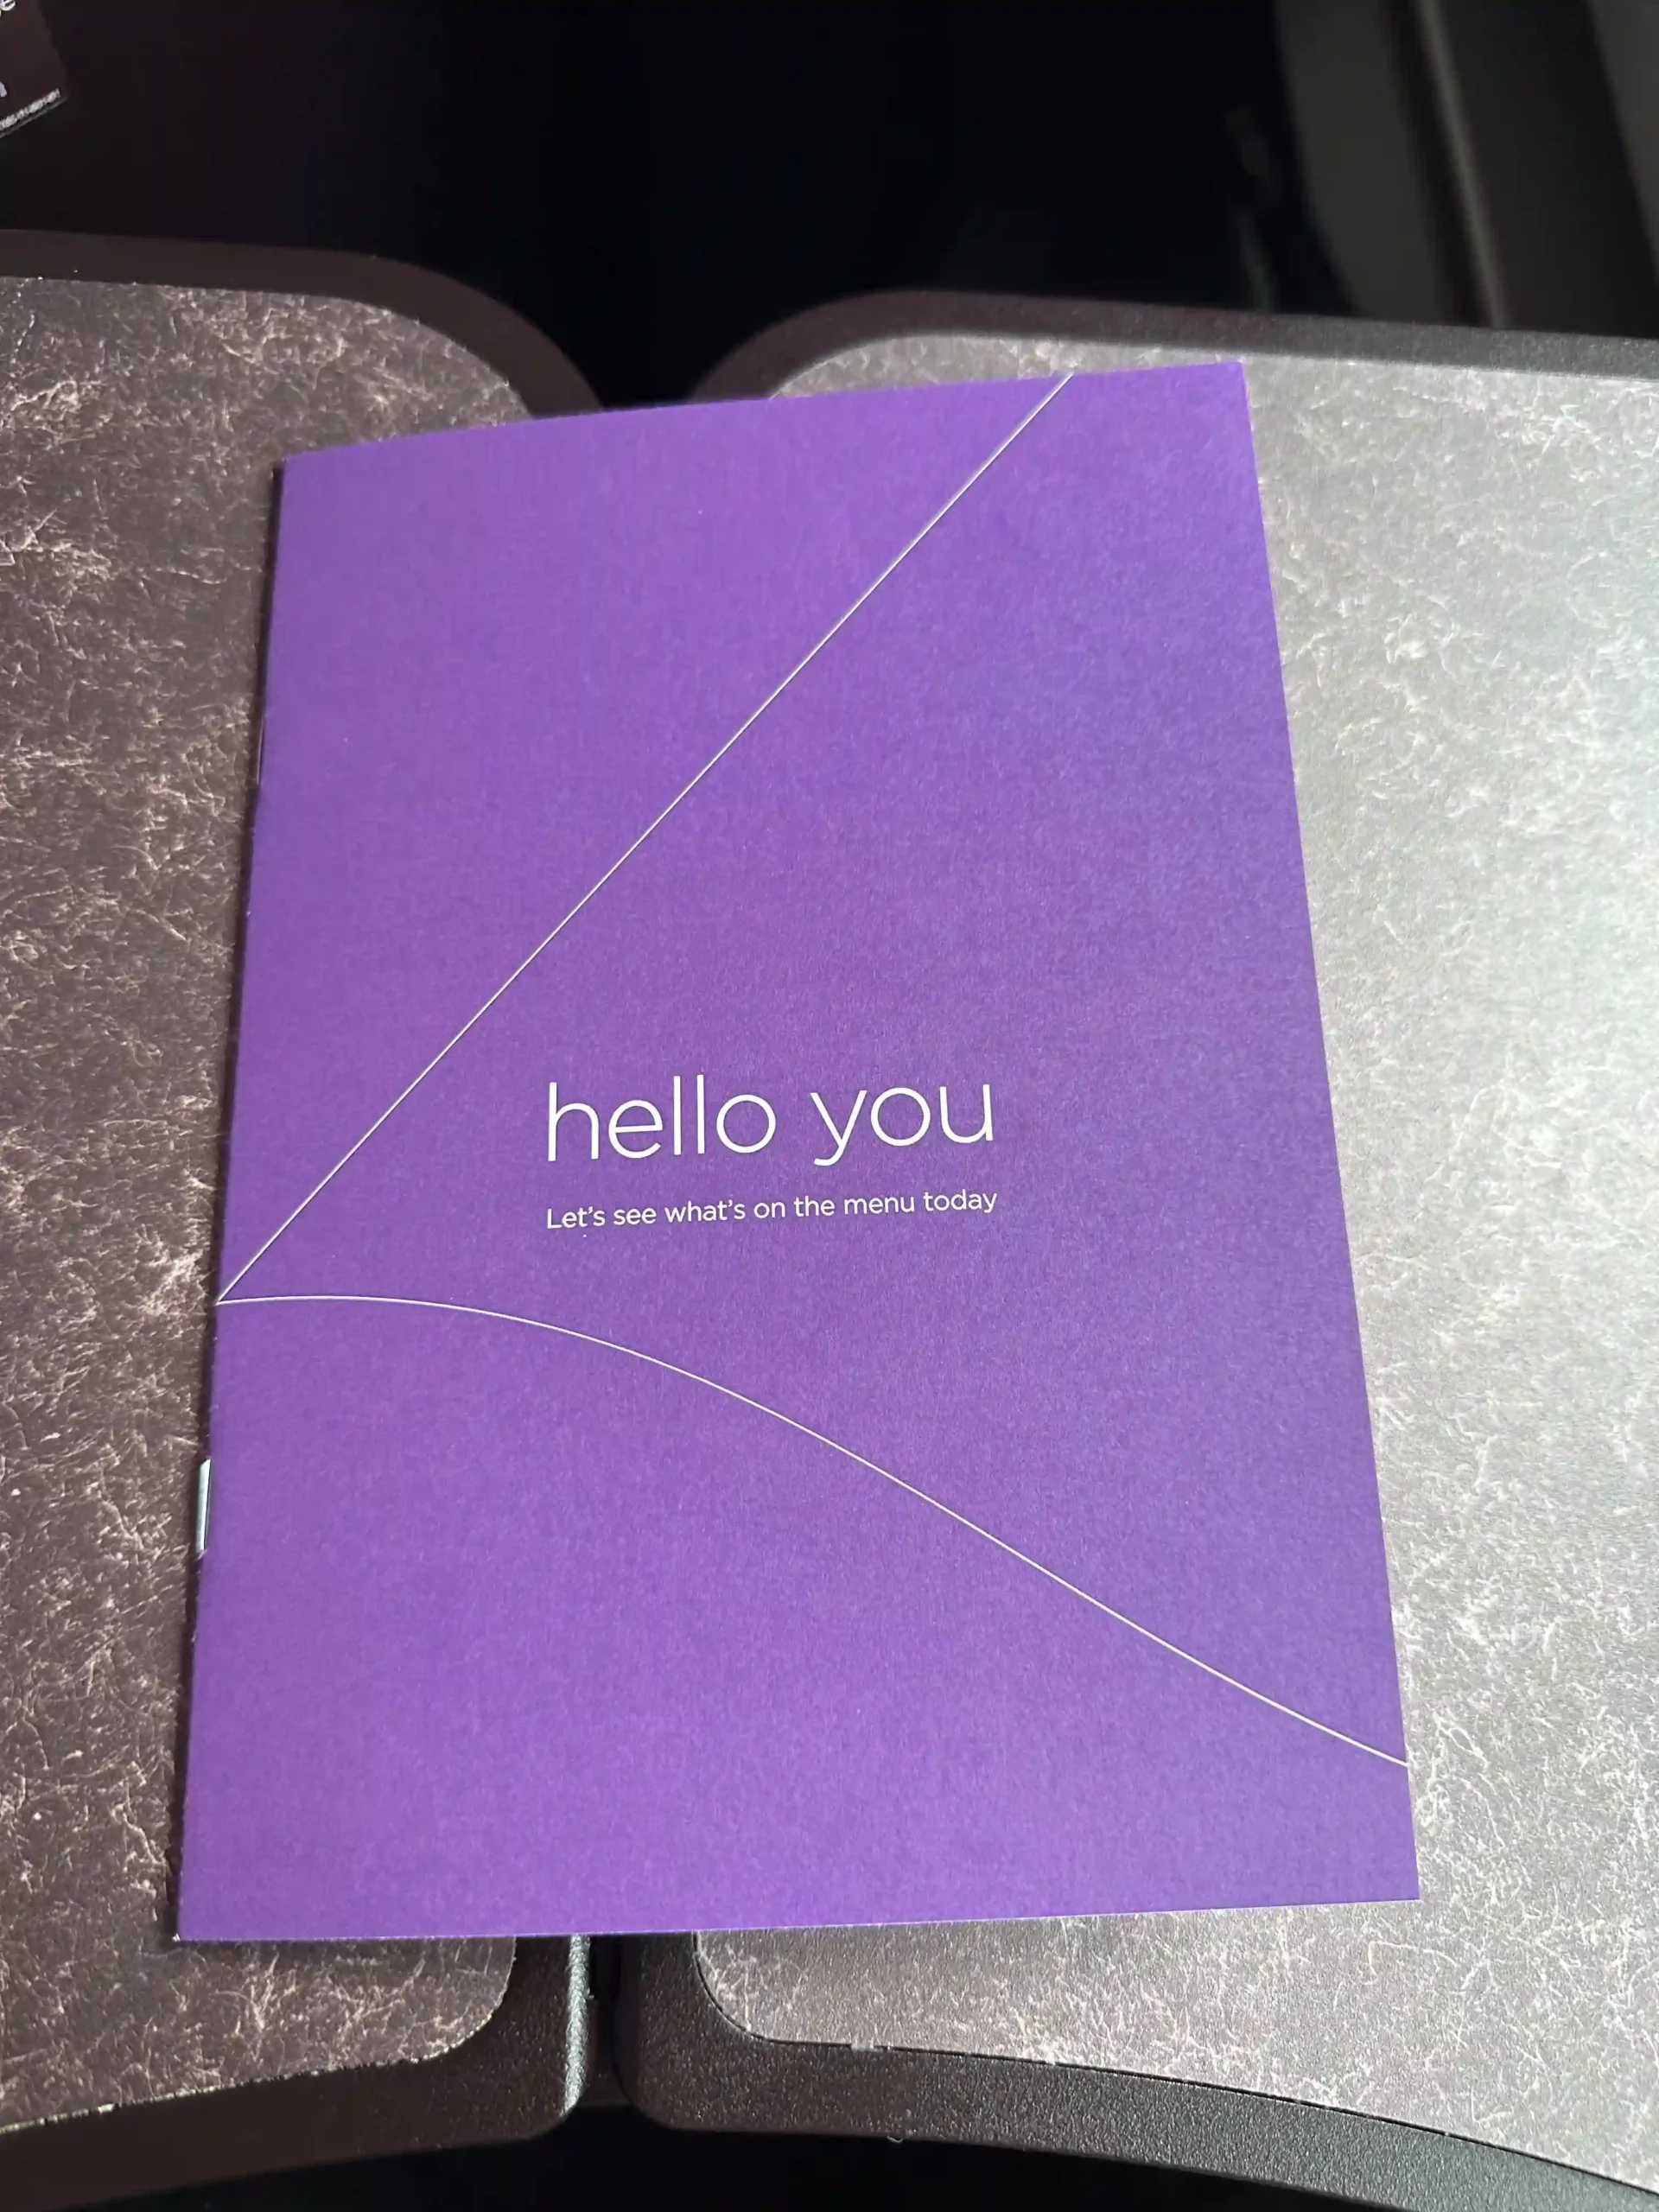 a purple card on a table